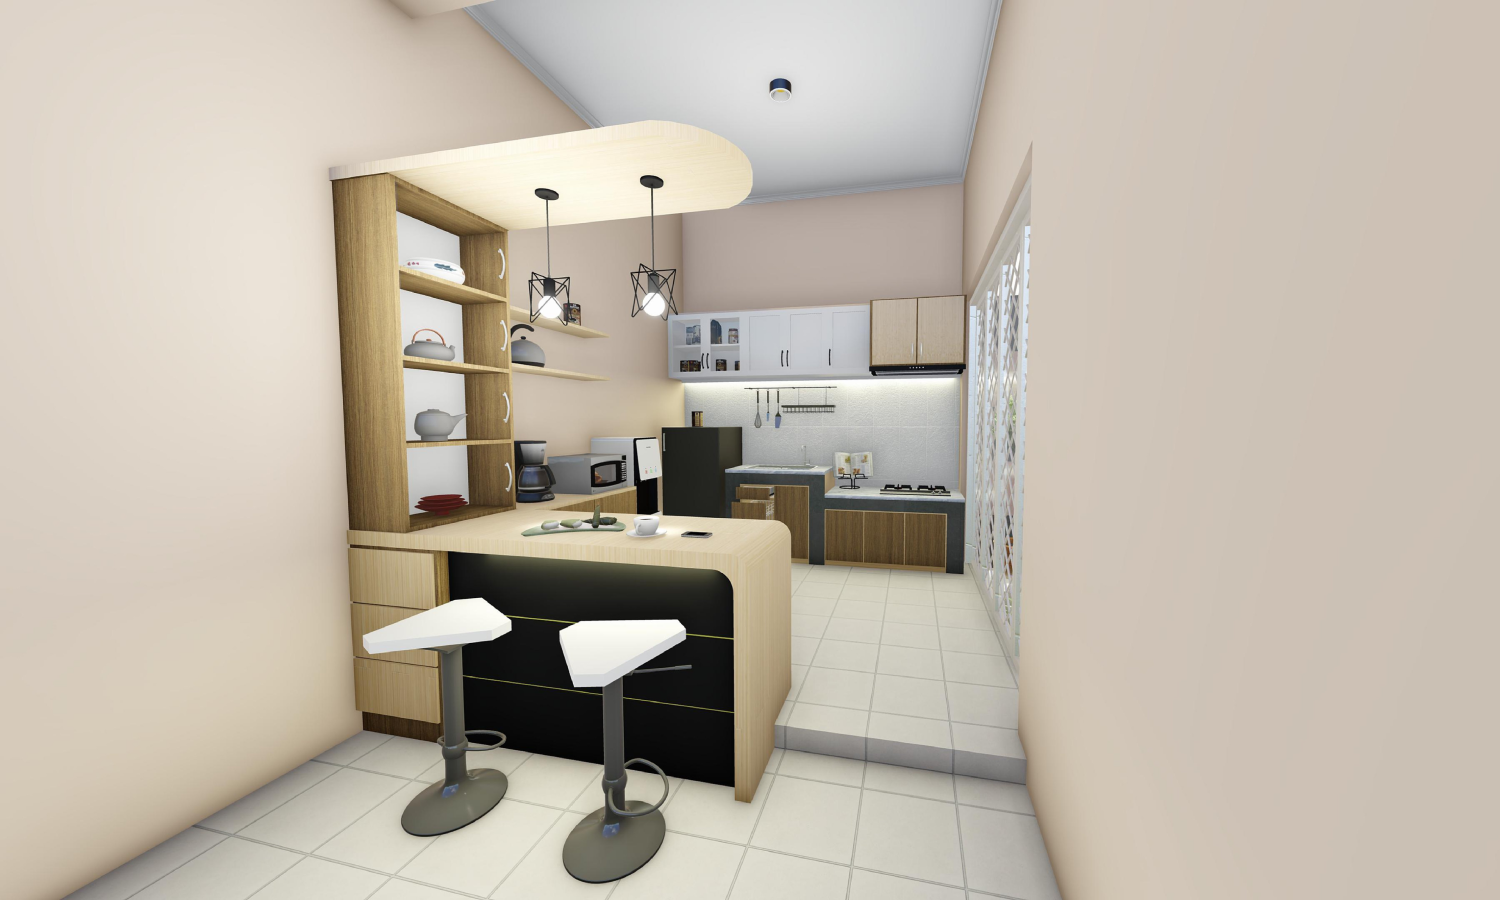  Desain Interior untuk Combine Kitchen Set